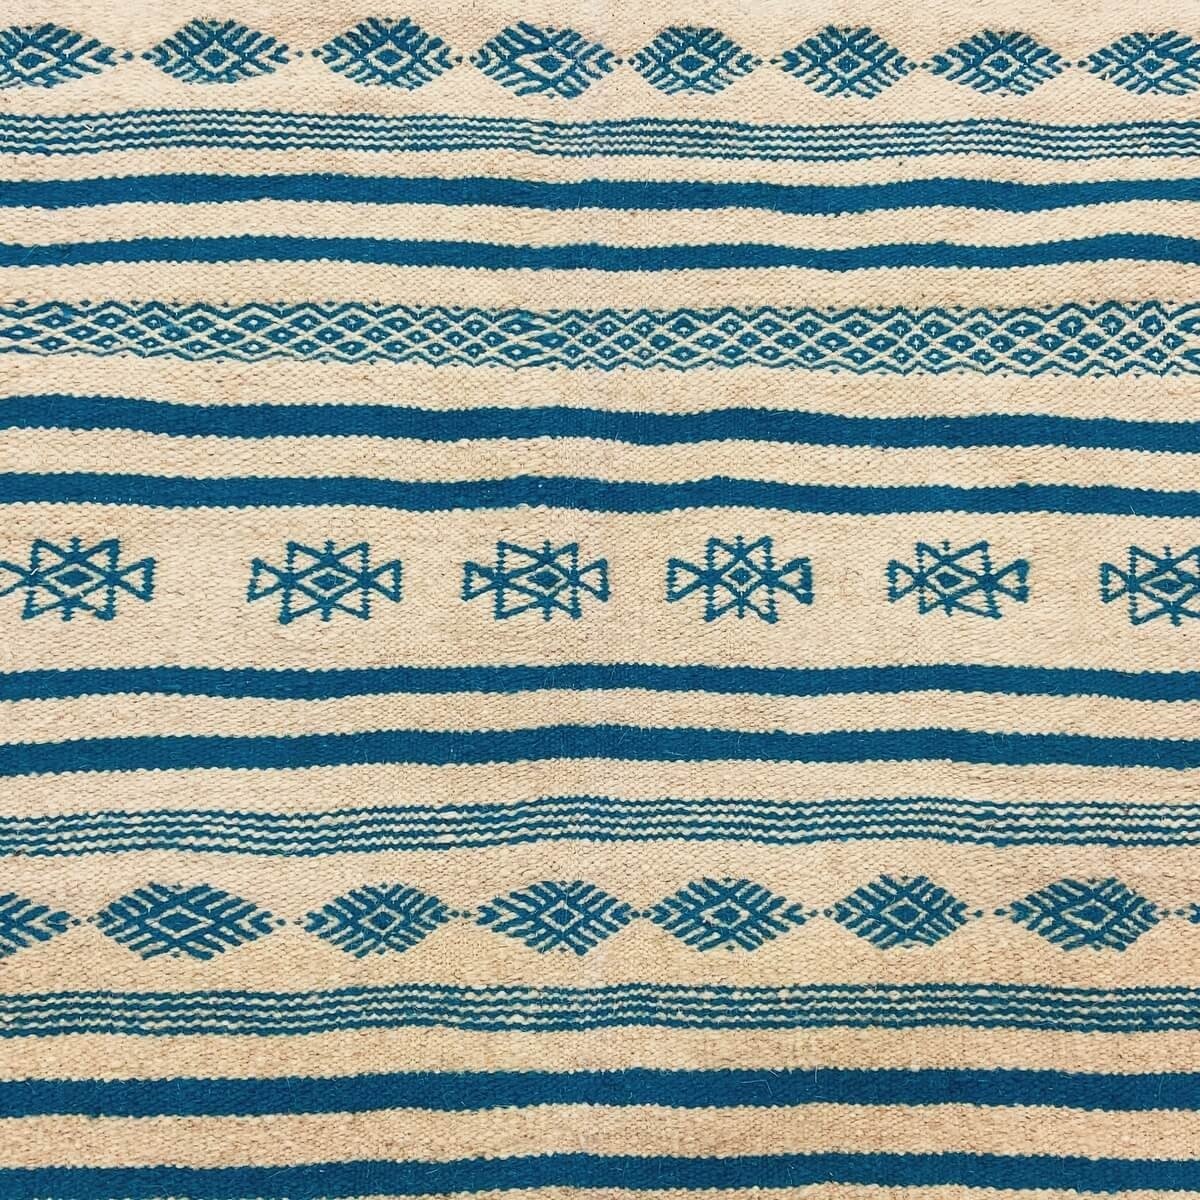 Tapete berbere Tapete Kilim longo Esesnou 114x186 cm Bege Azul (Tecidos à mão, Lã, Tunísia) Tapete tunisiano kilim, estilo marro